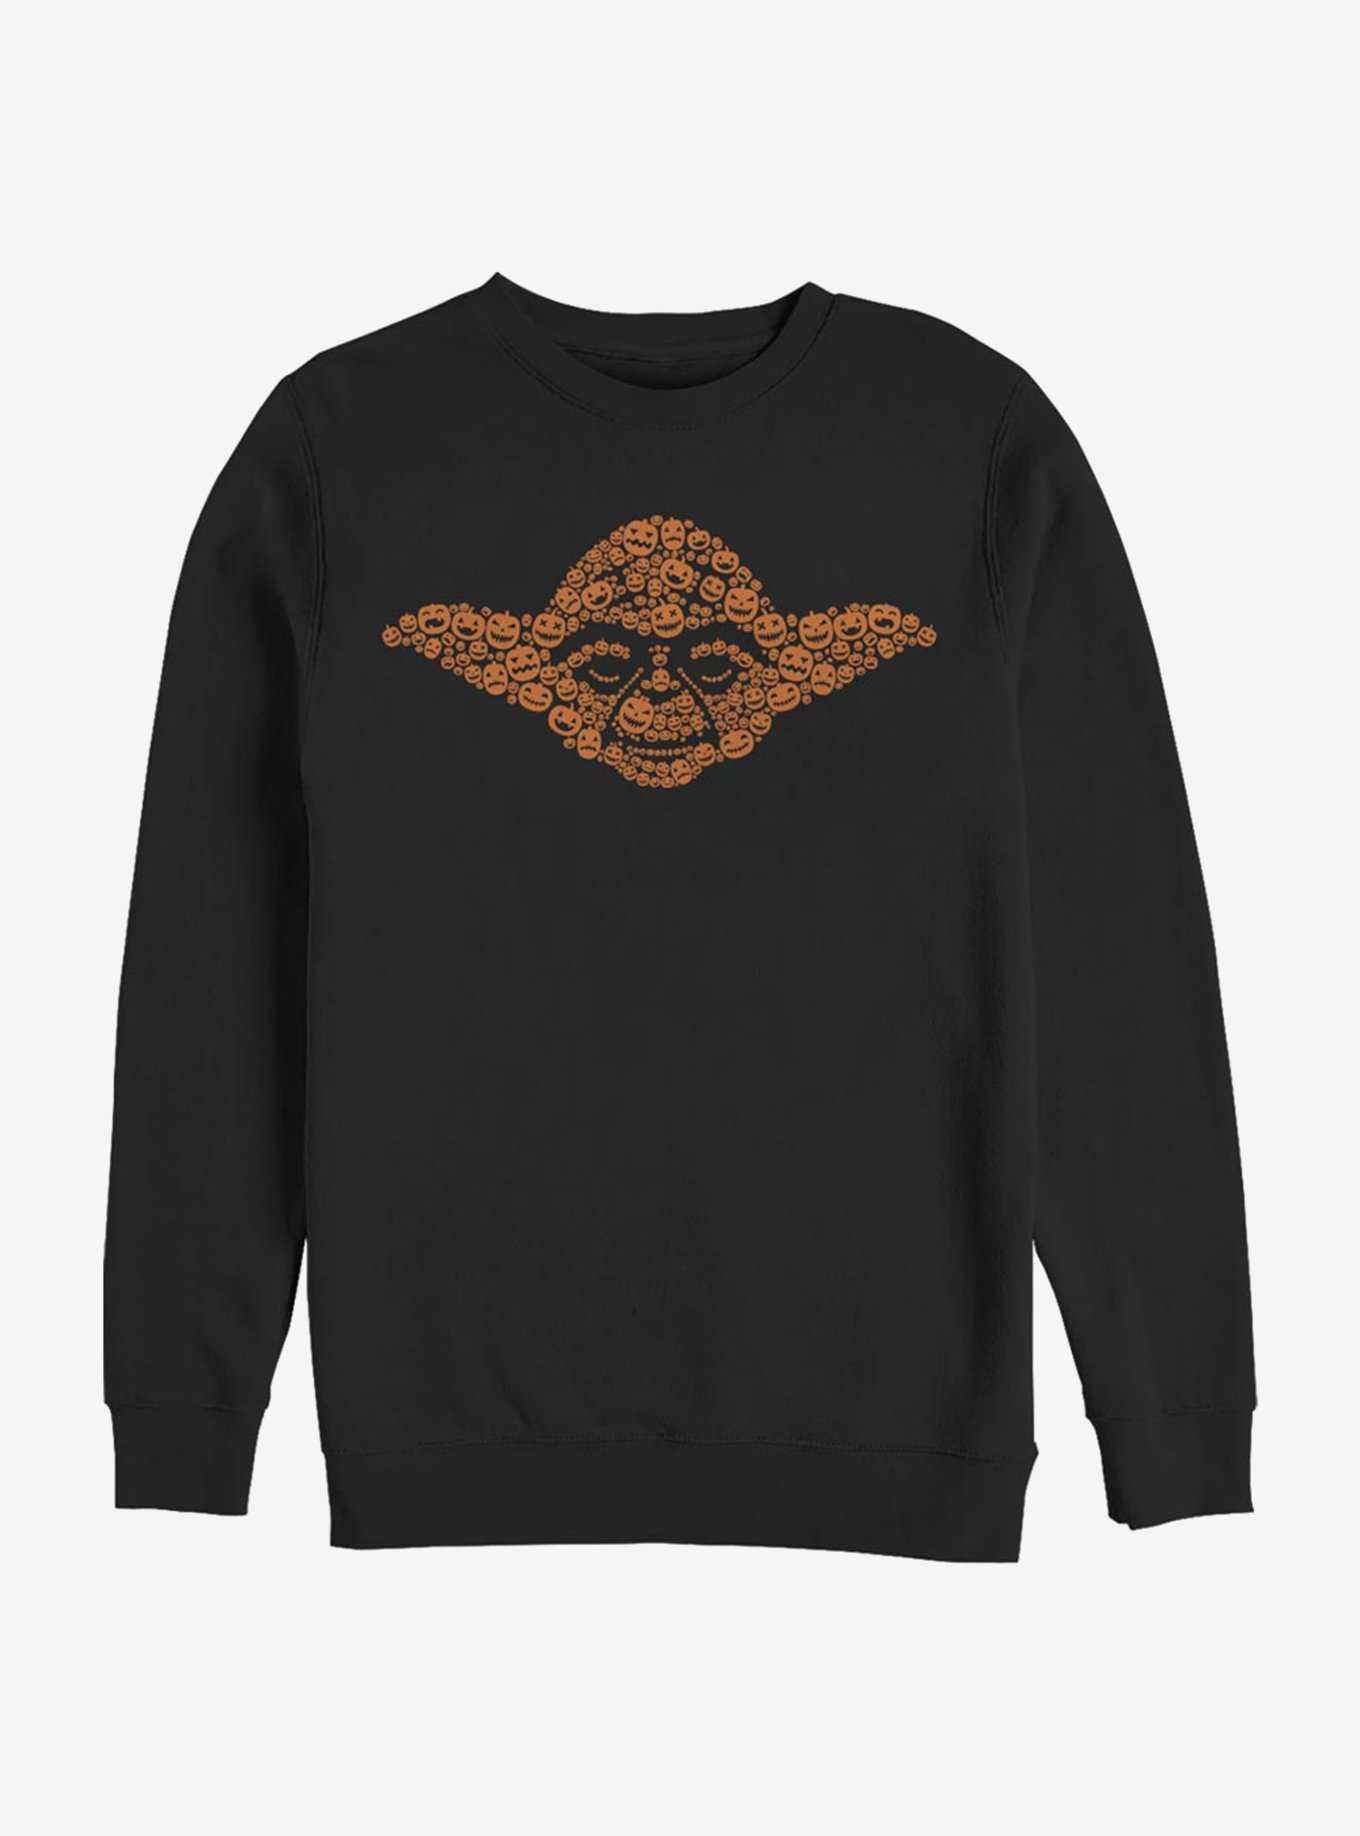 Star Wars Yoda Jackolanterns Sweatshirt, , hi-res